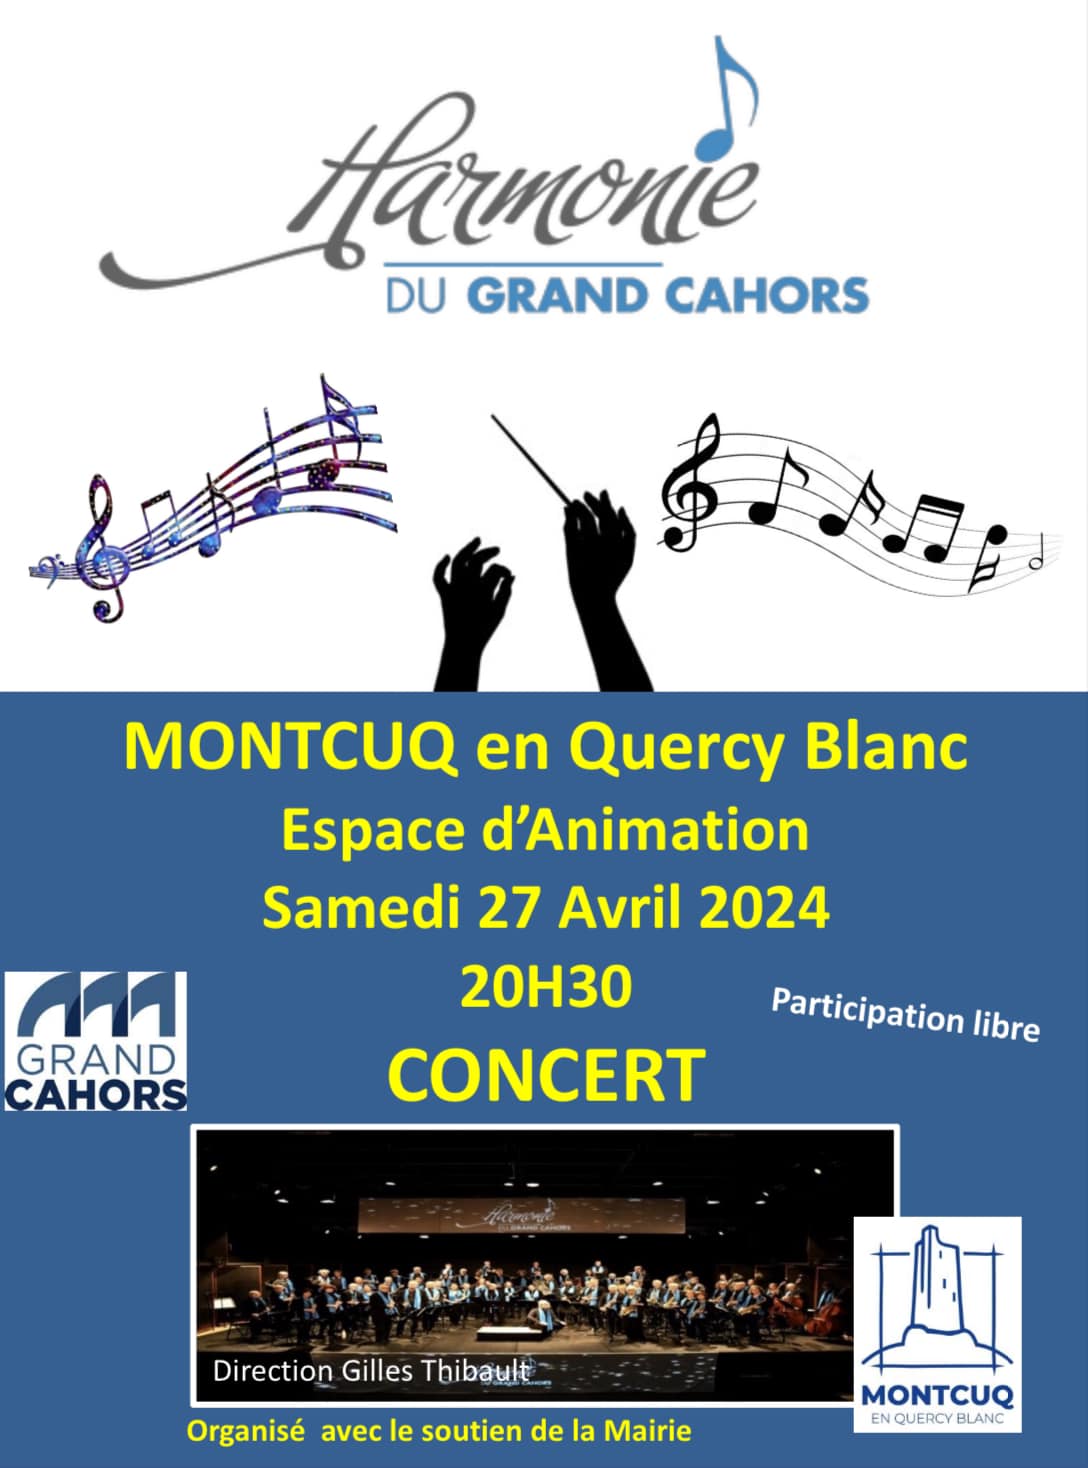 Figeac : Concert à Montcuq: Harmonie du Grand Cahors